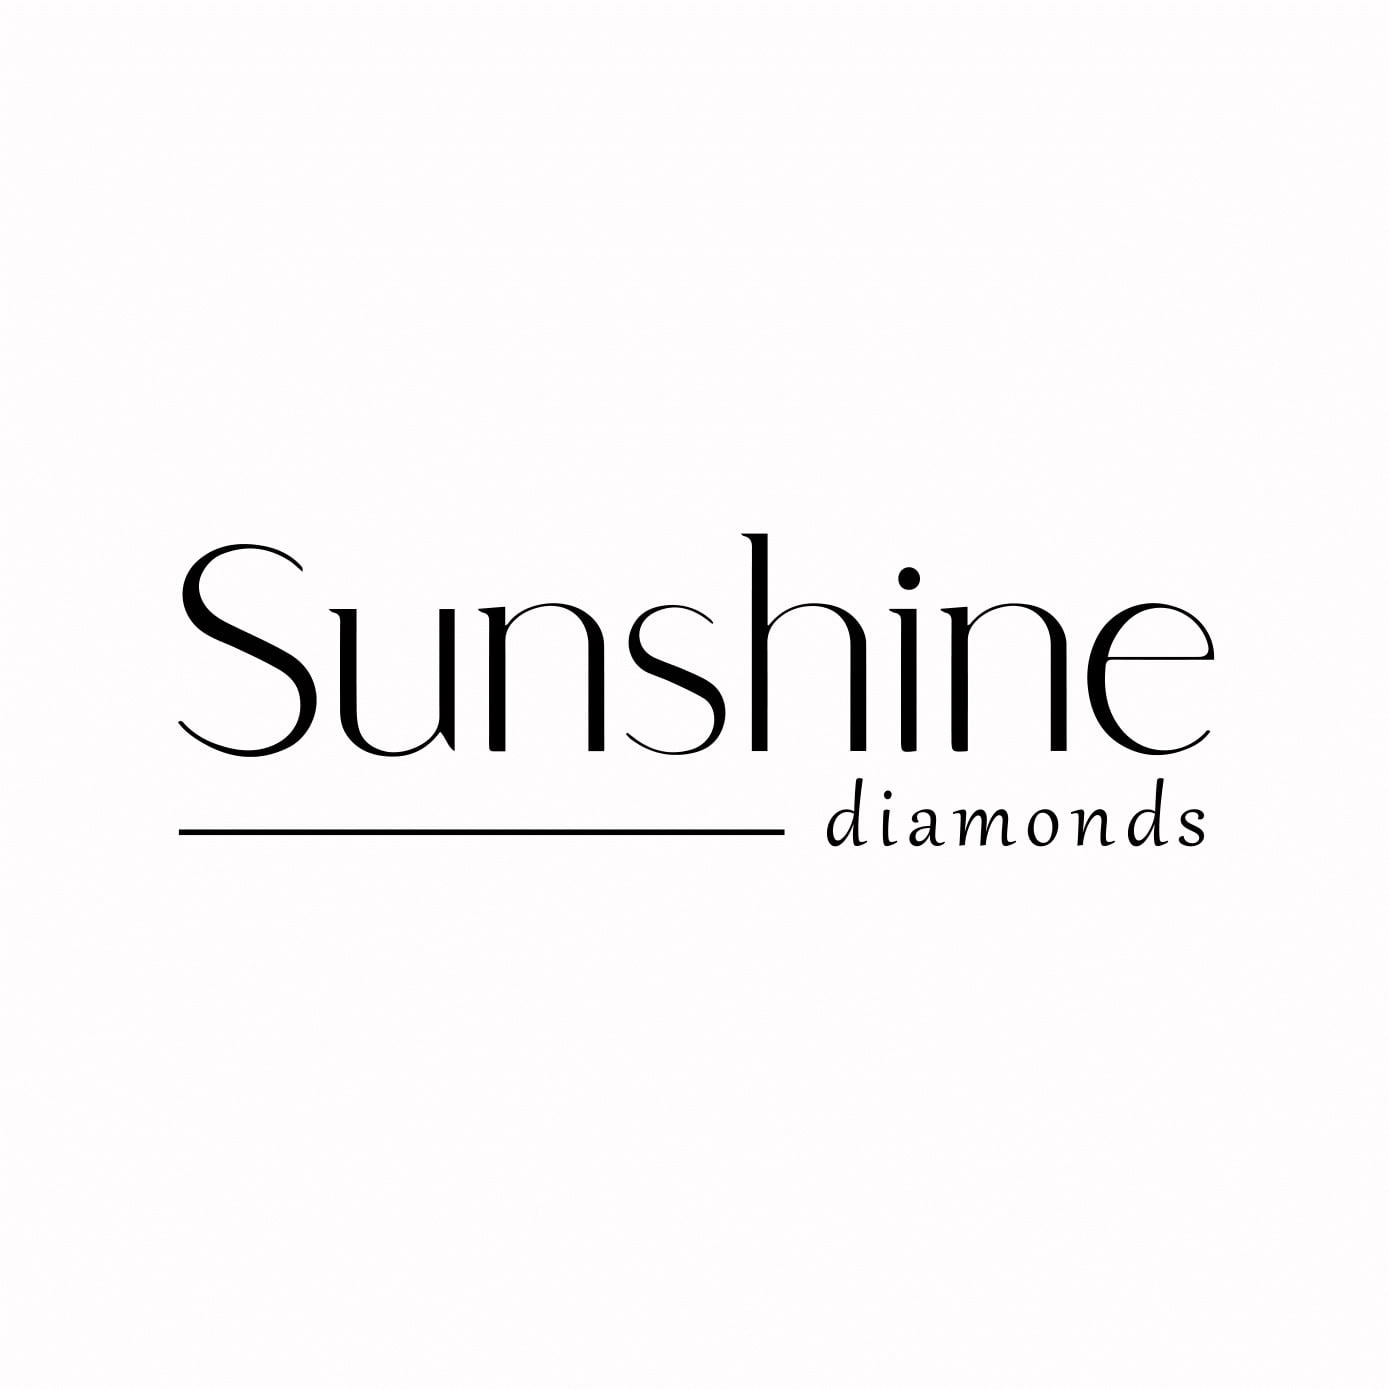 Sunshine diamonds logo